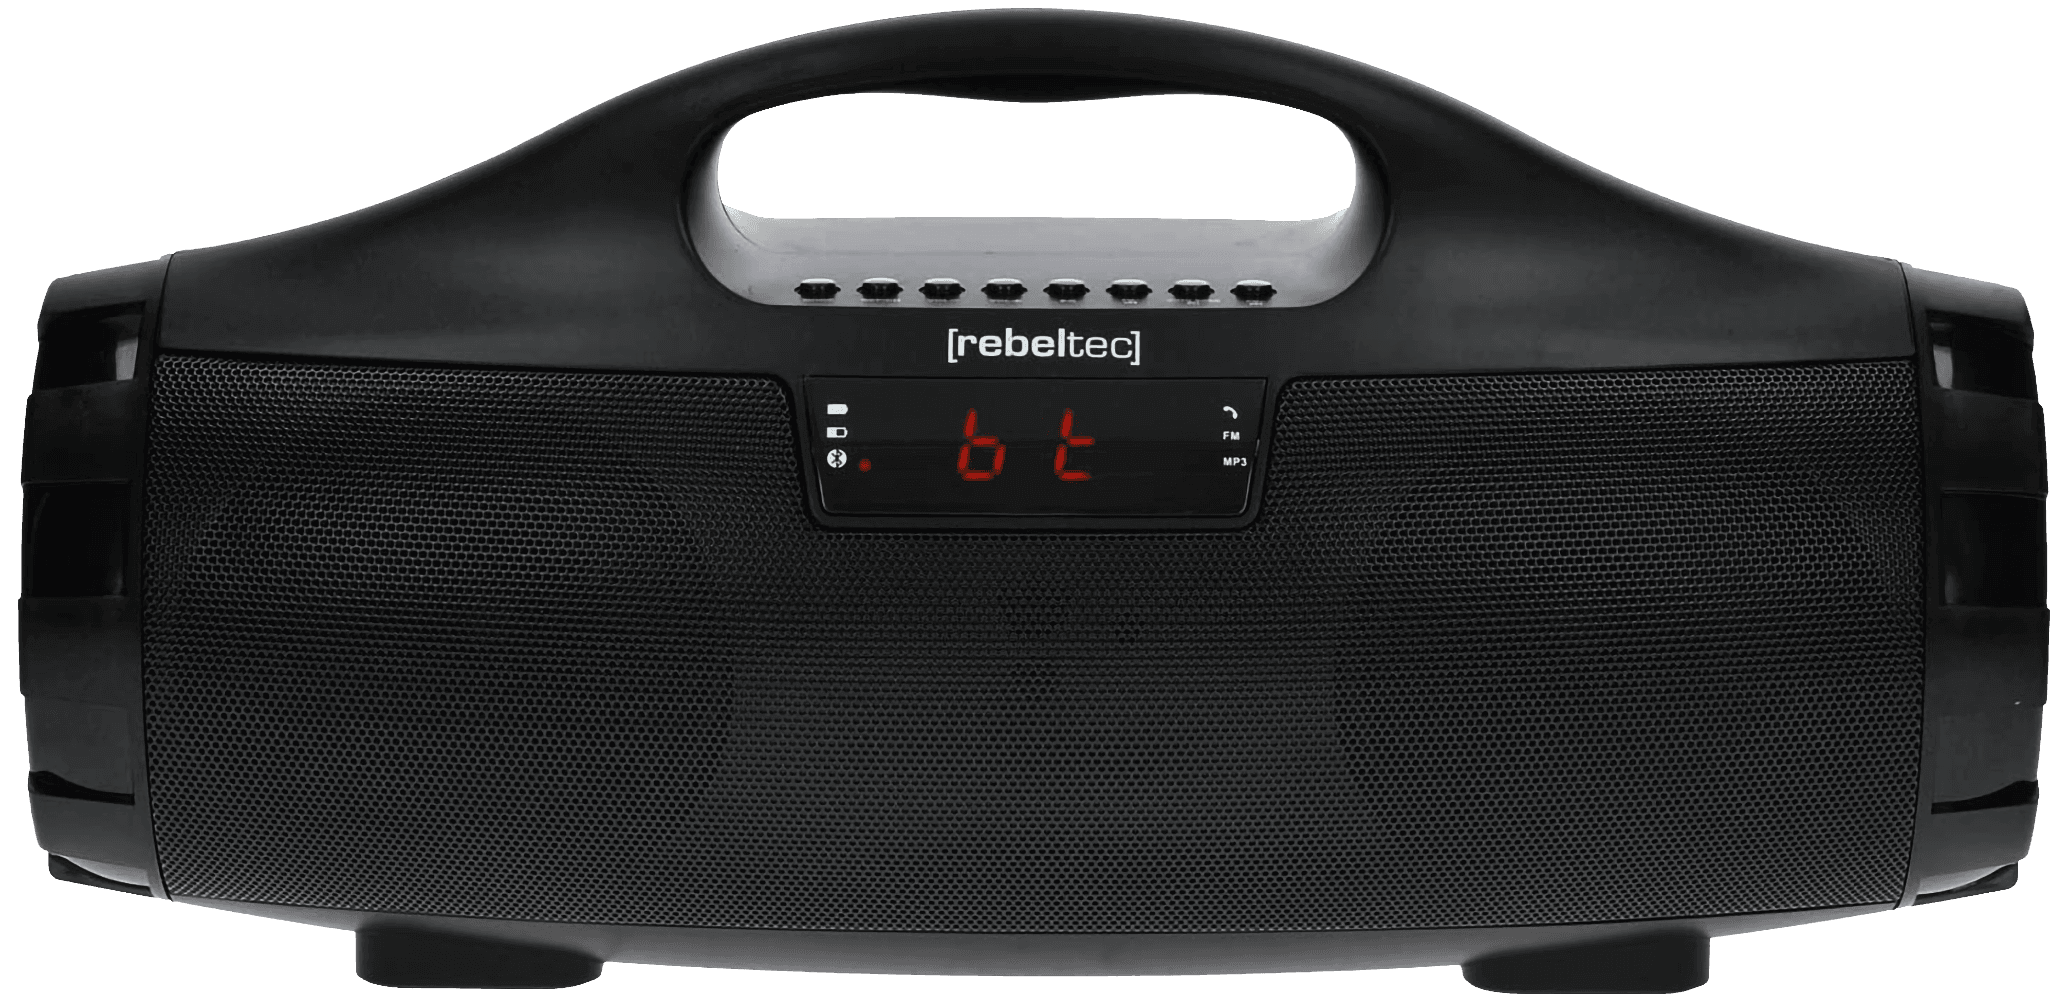 Huawei Mate 20 Lite kompatibilis bluetooth hangszóró Rebeltec Soundbox 390 fekete